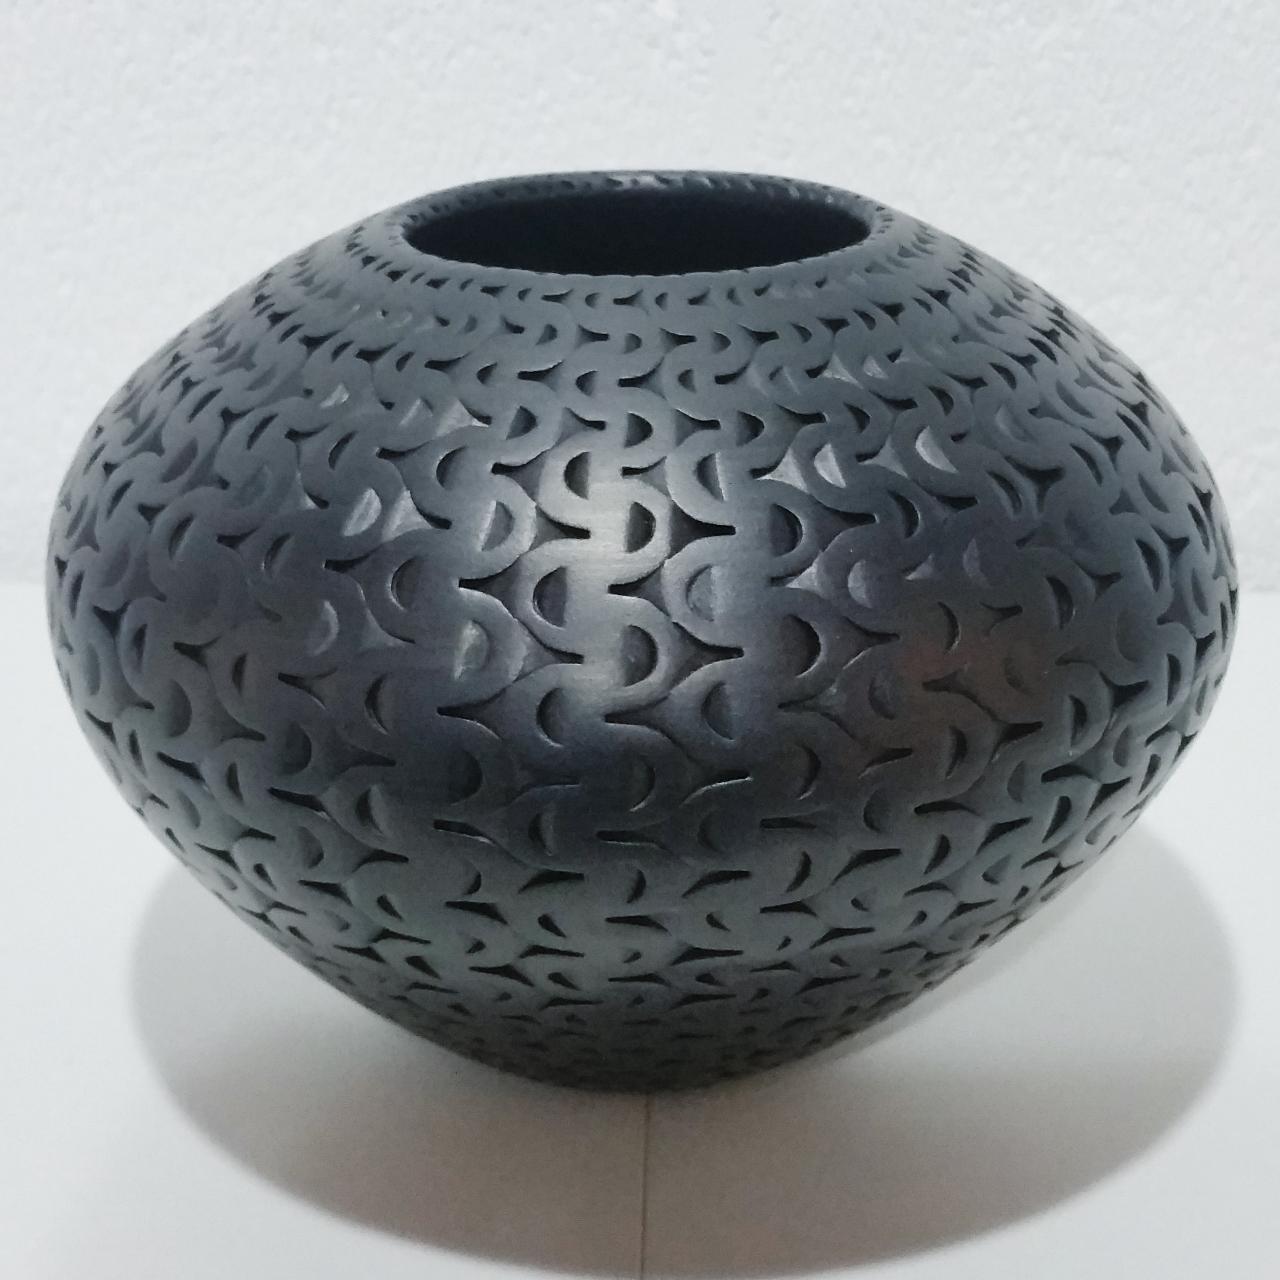 Black Buckle Vessel - contemporary modern abstract geometric ceramic vase vessel - Art by Michael Wisner